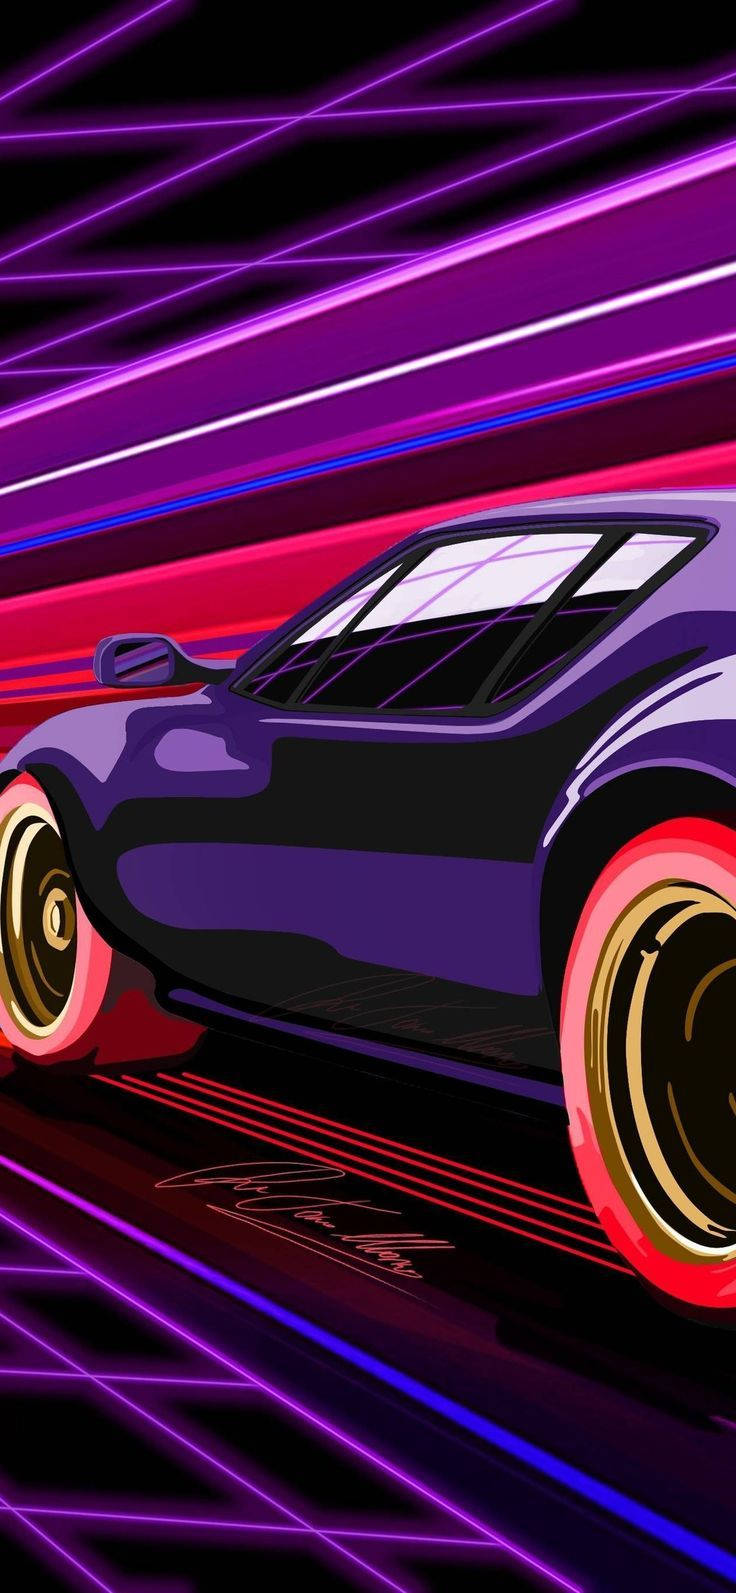 Illustration Of Futuristic Violet Car Iphone Background